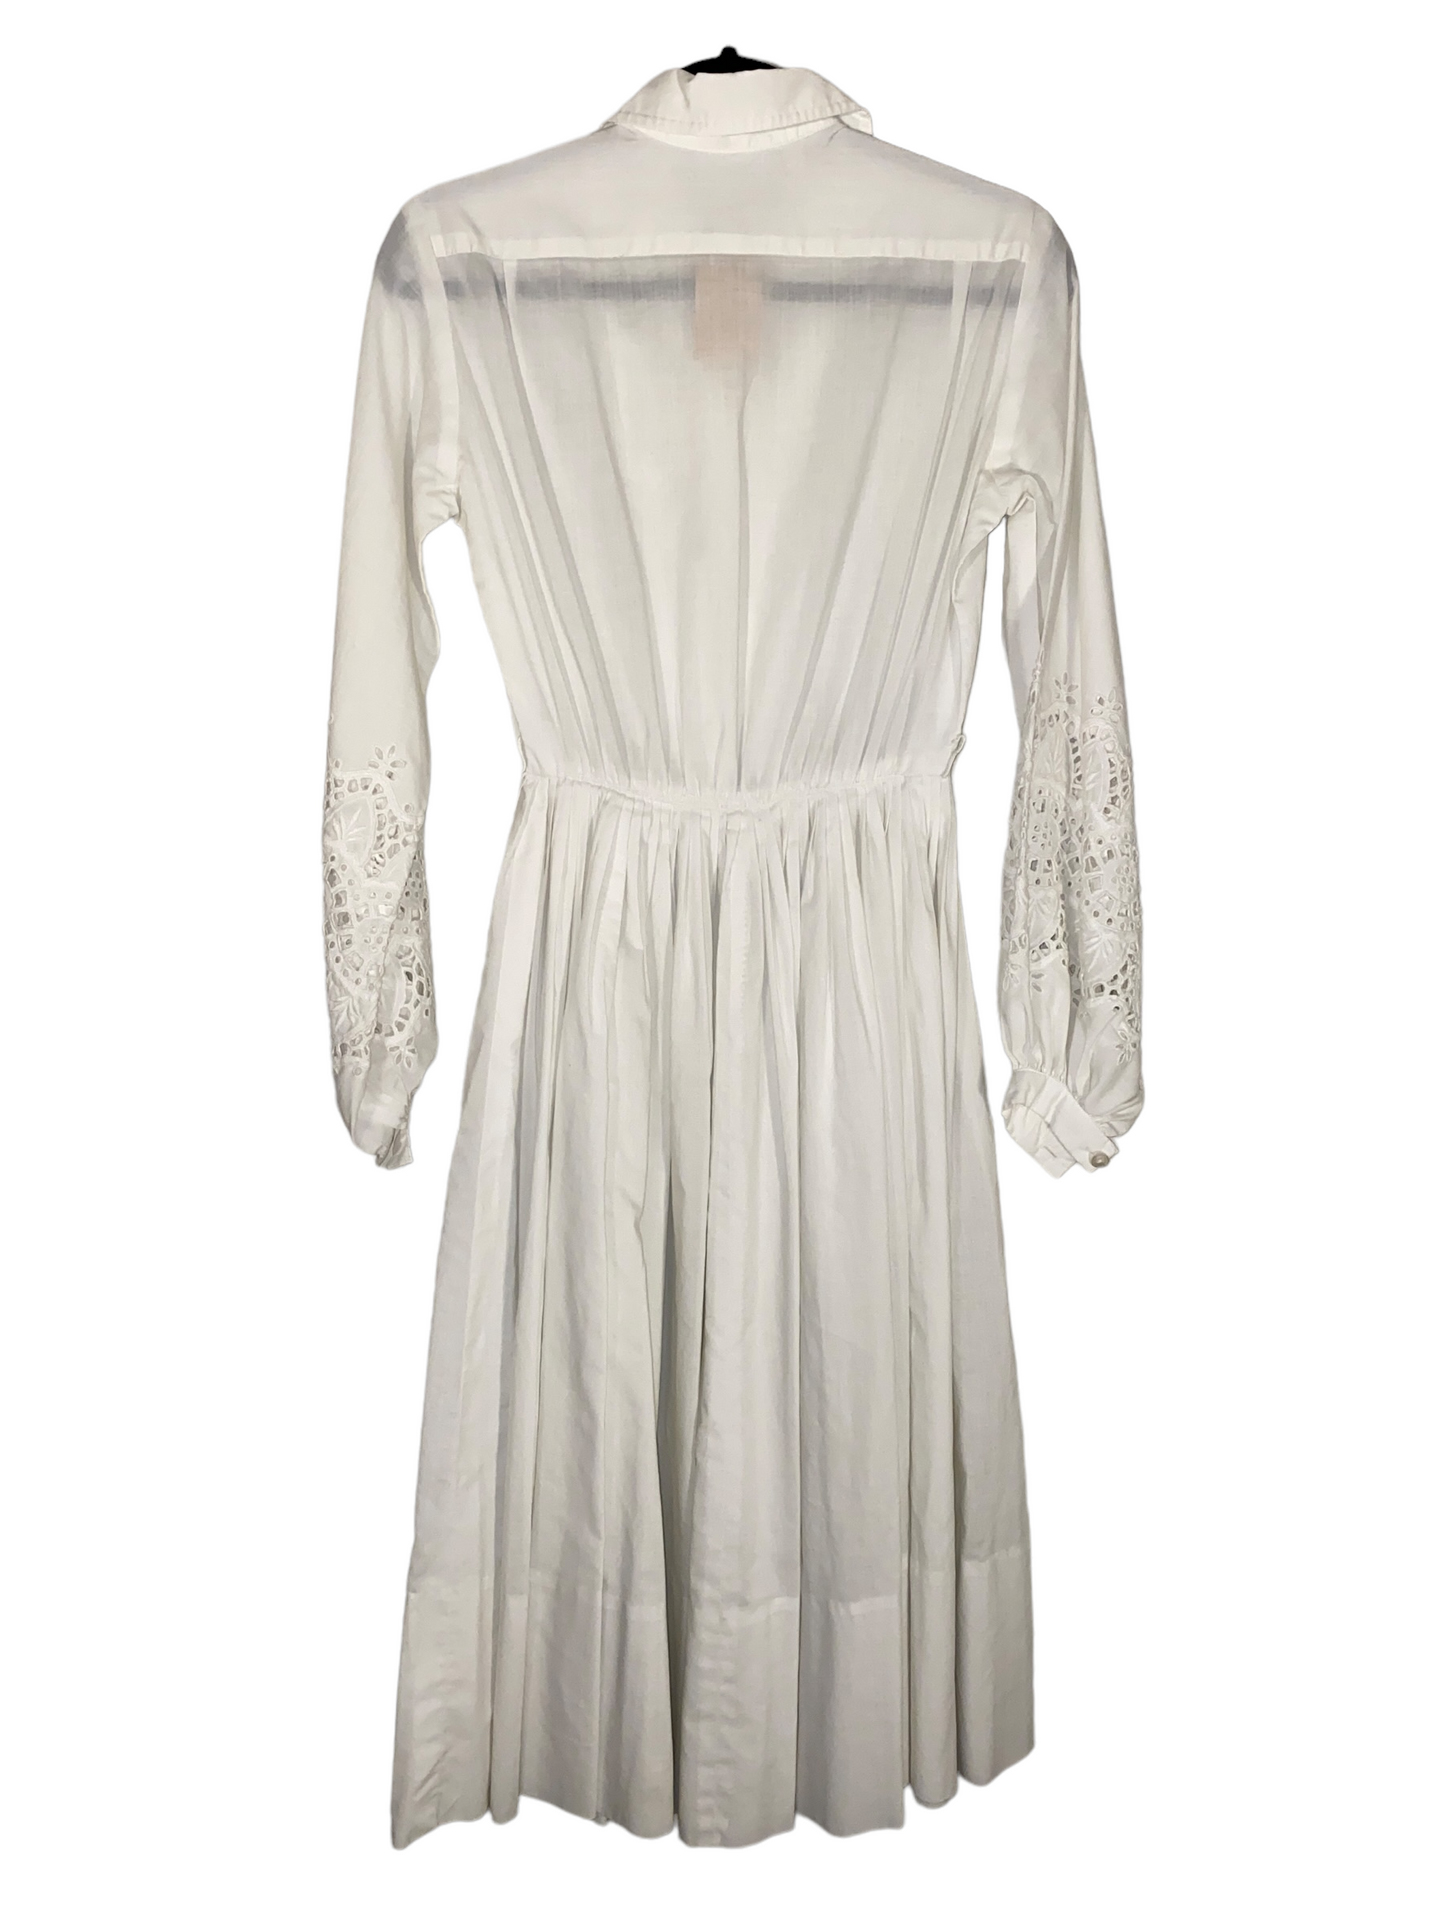 1970s White Dress w Pinhole Lace Bell Sleeves (XXS)